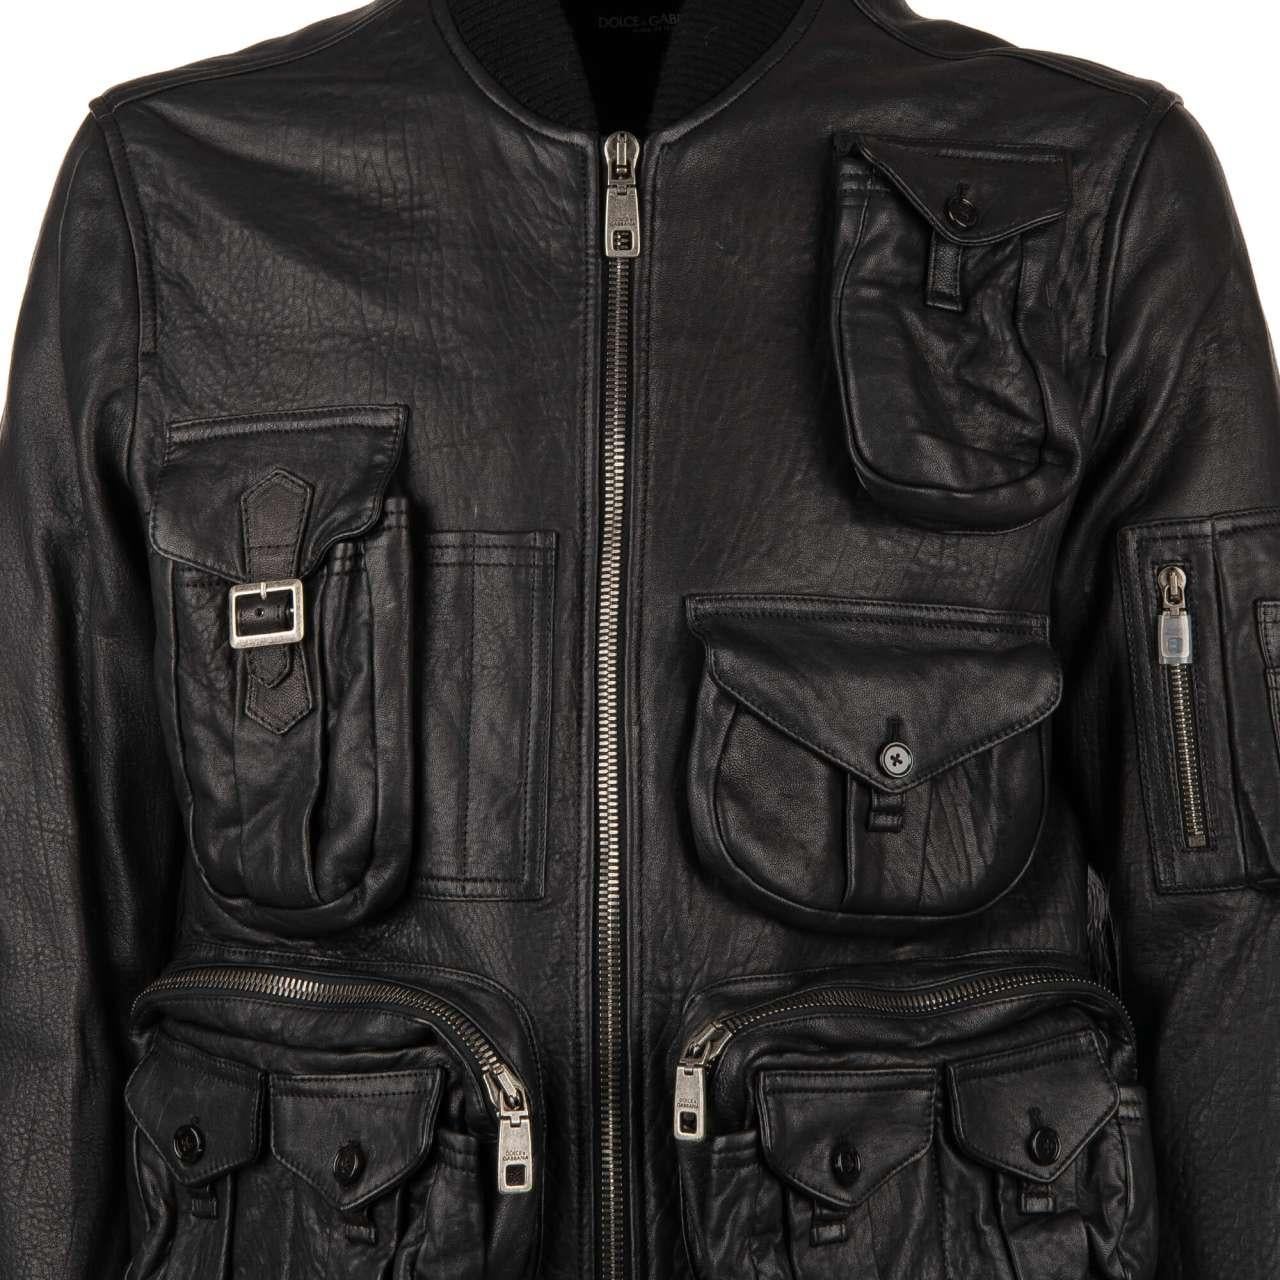 Dolce & Gabbana - Multi-Pocket Military Inspired Nappa Leather Jacket Black 46 For Sale 1